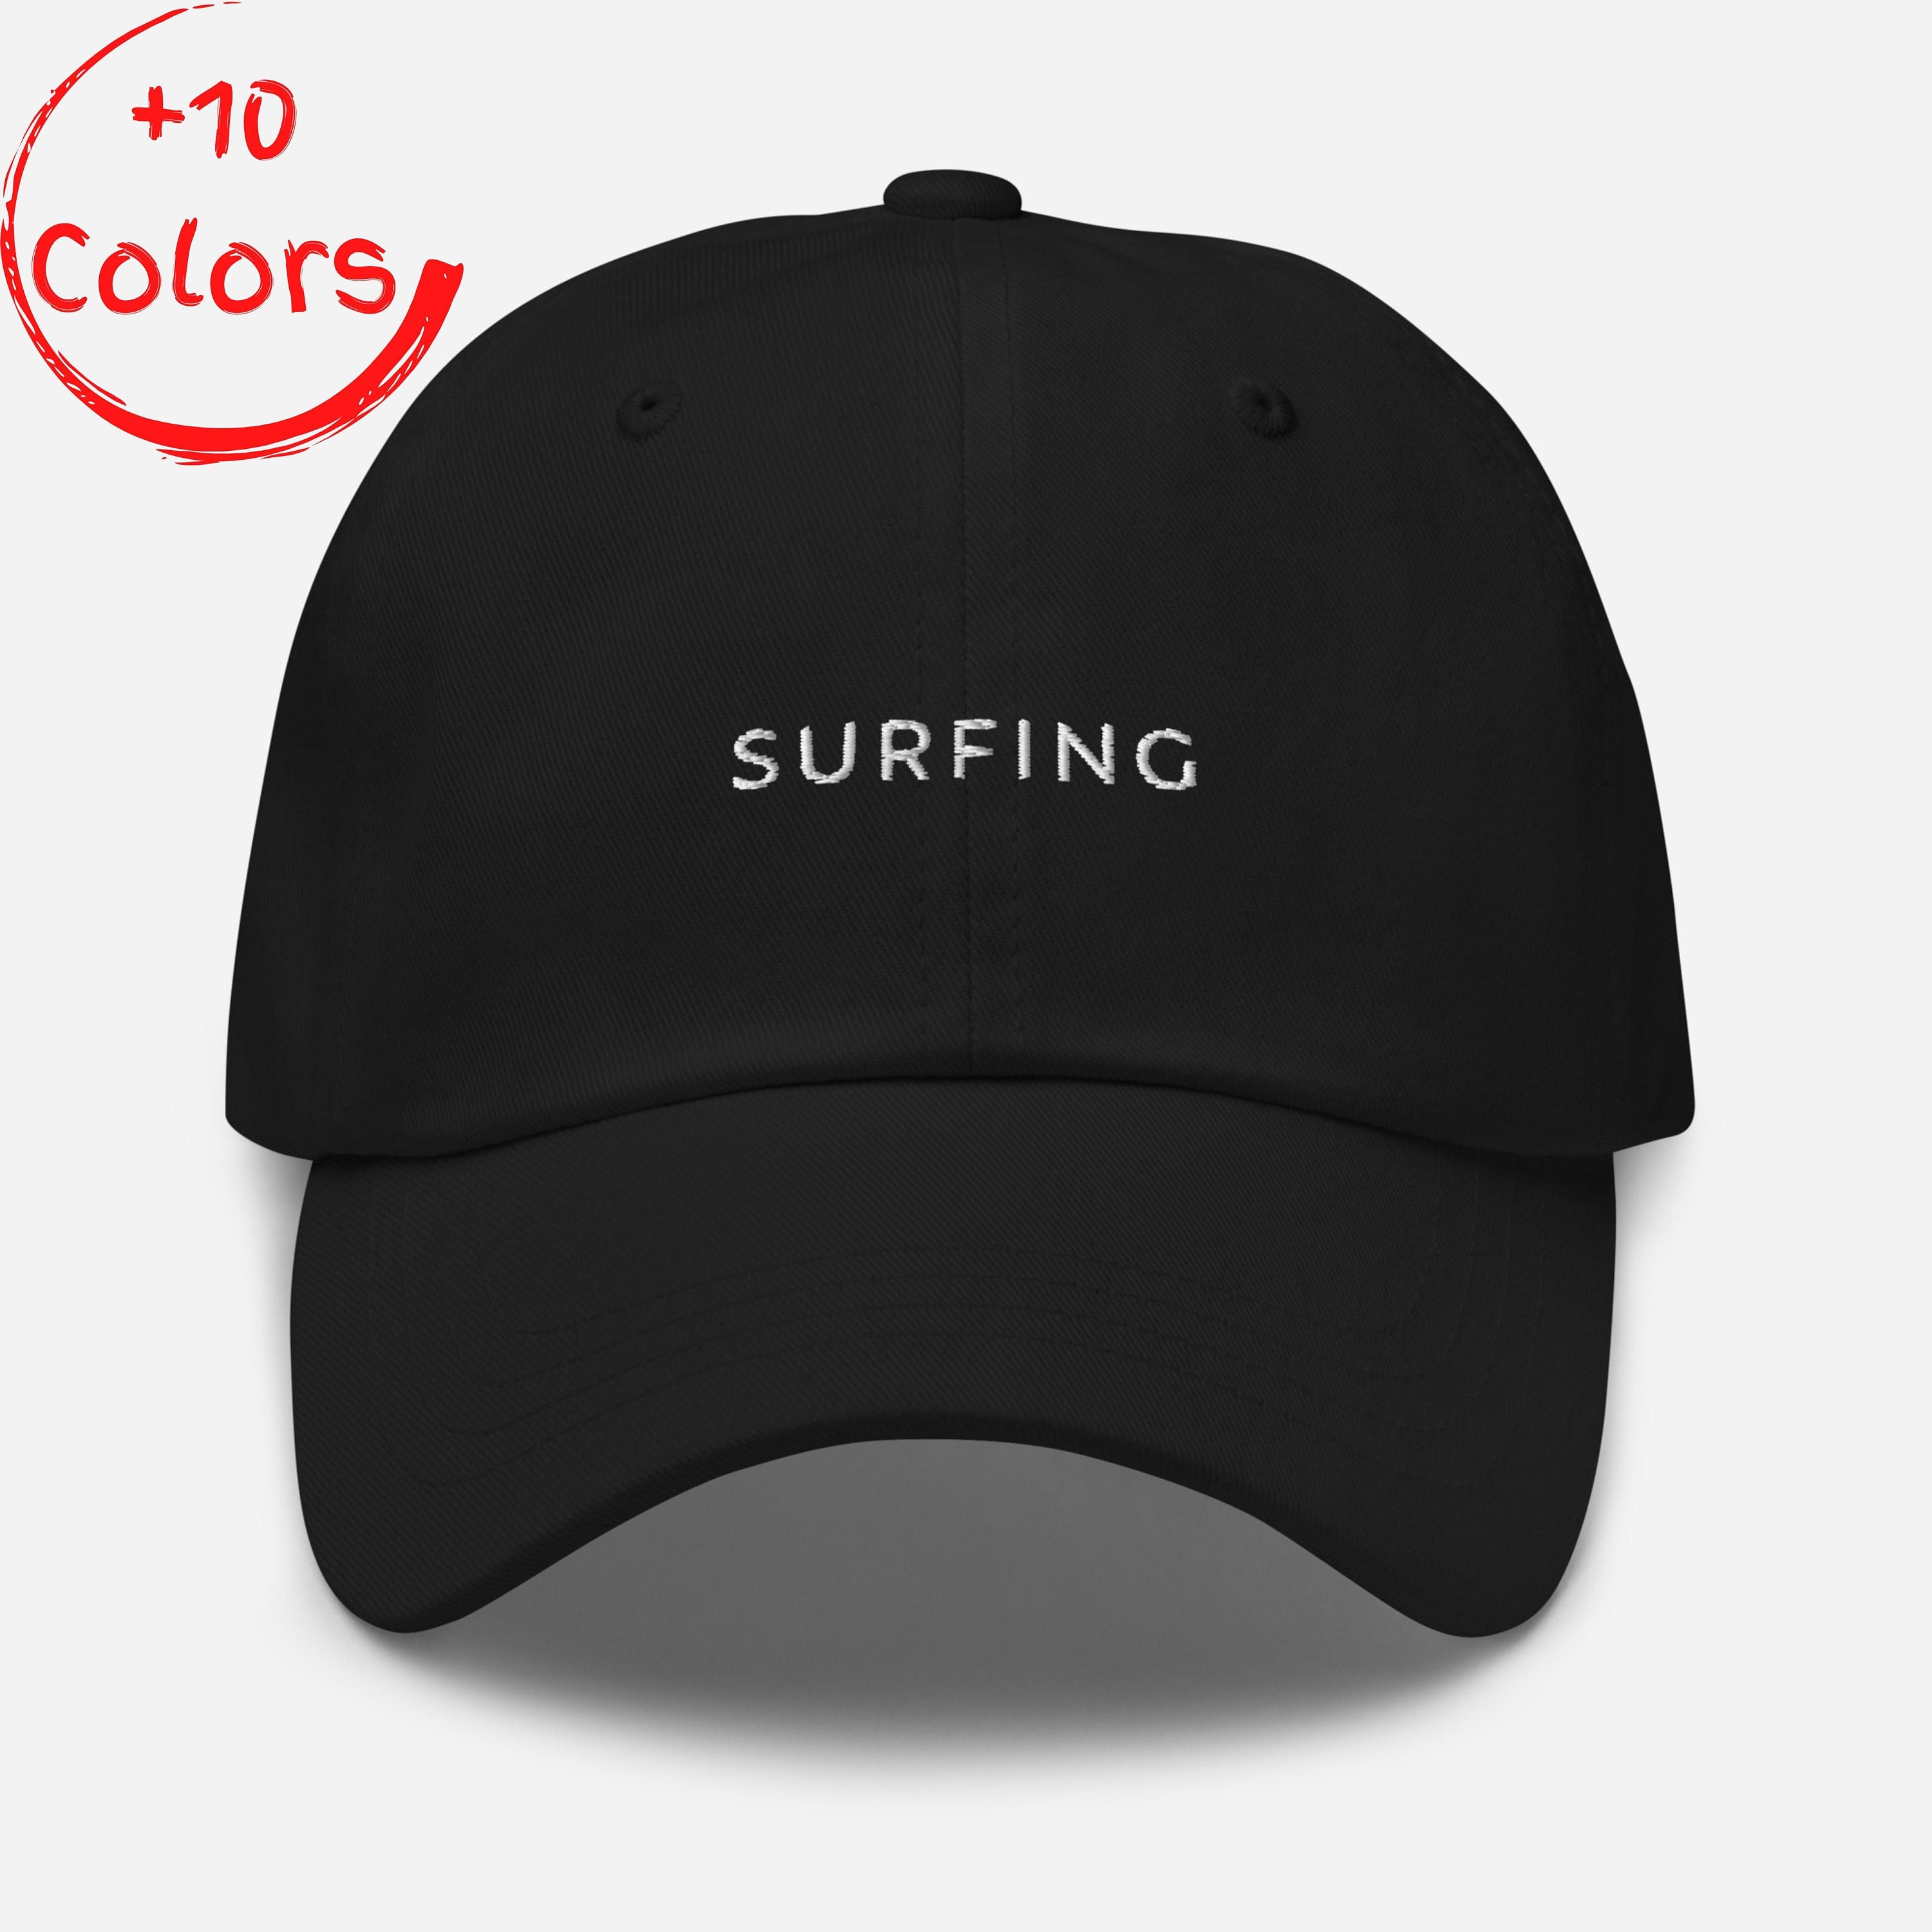 Surfer Riding Wave Dad Hat, Surfer Hat, Surfing Cap, Surfing Design, Beach Hat, Surfer Love, Gift for Surfer, Surfing Baseball Hat